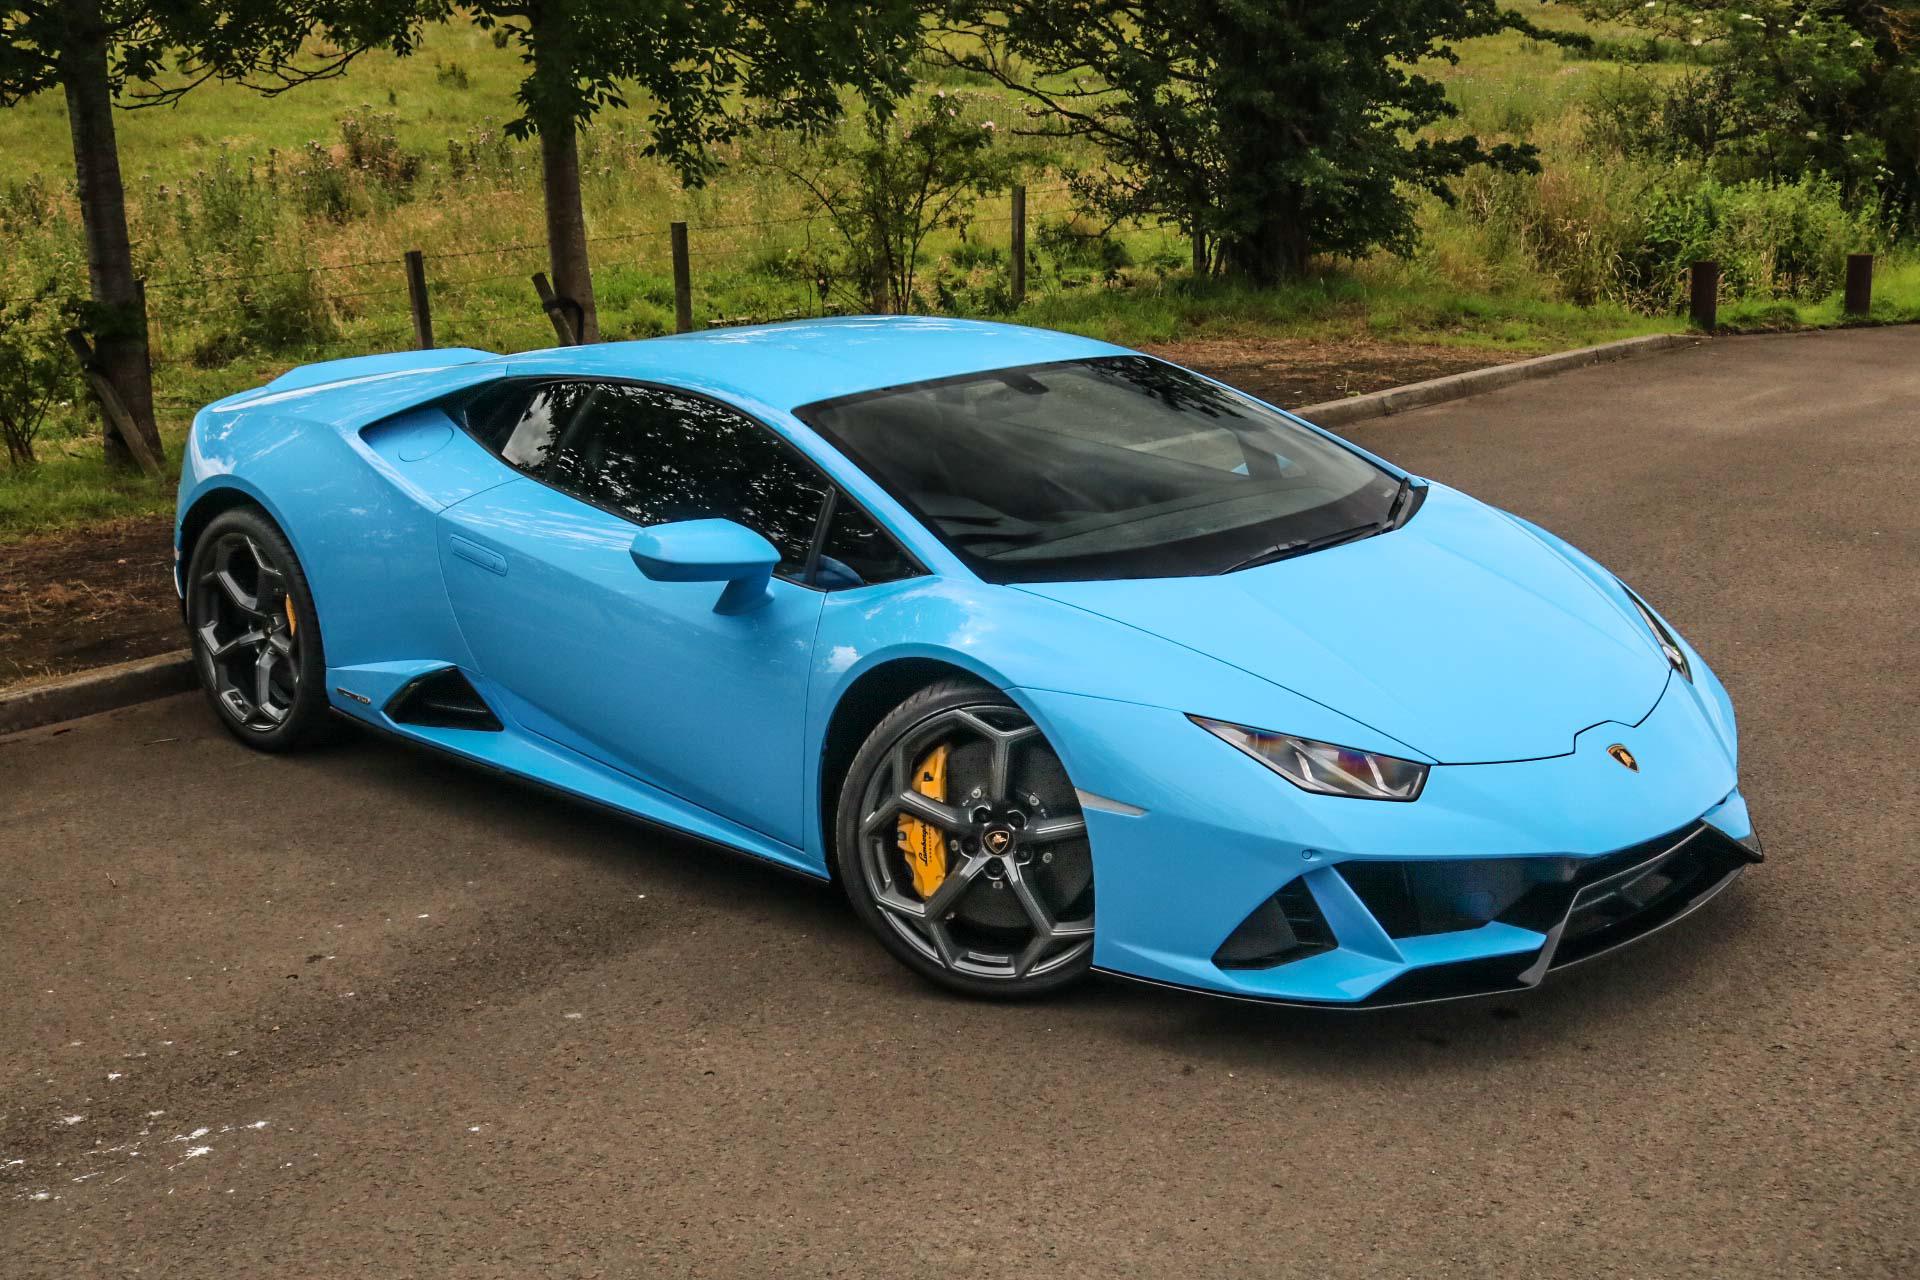 Lamborghini Edinburgh Fort Kinnaird 01314 755500